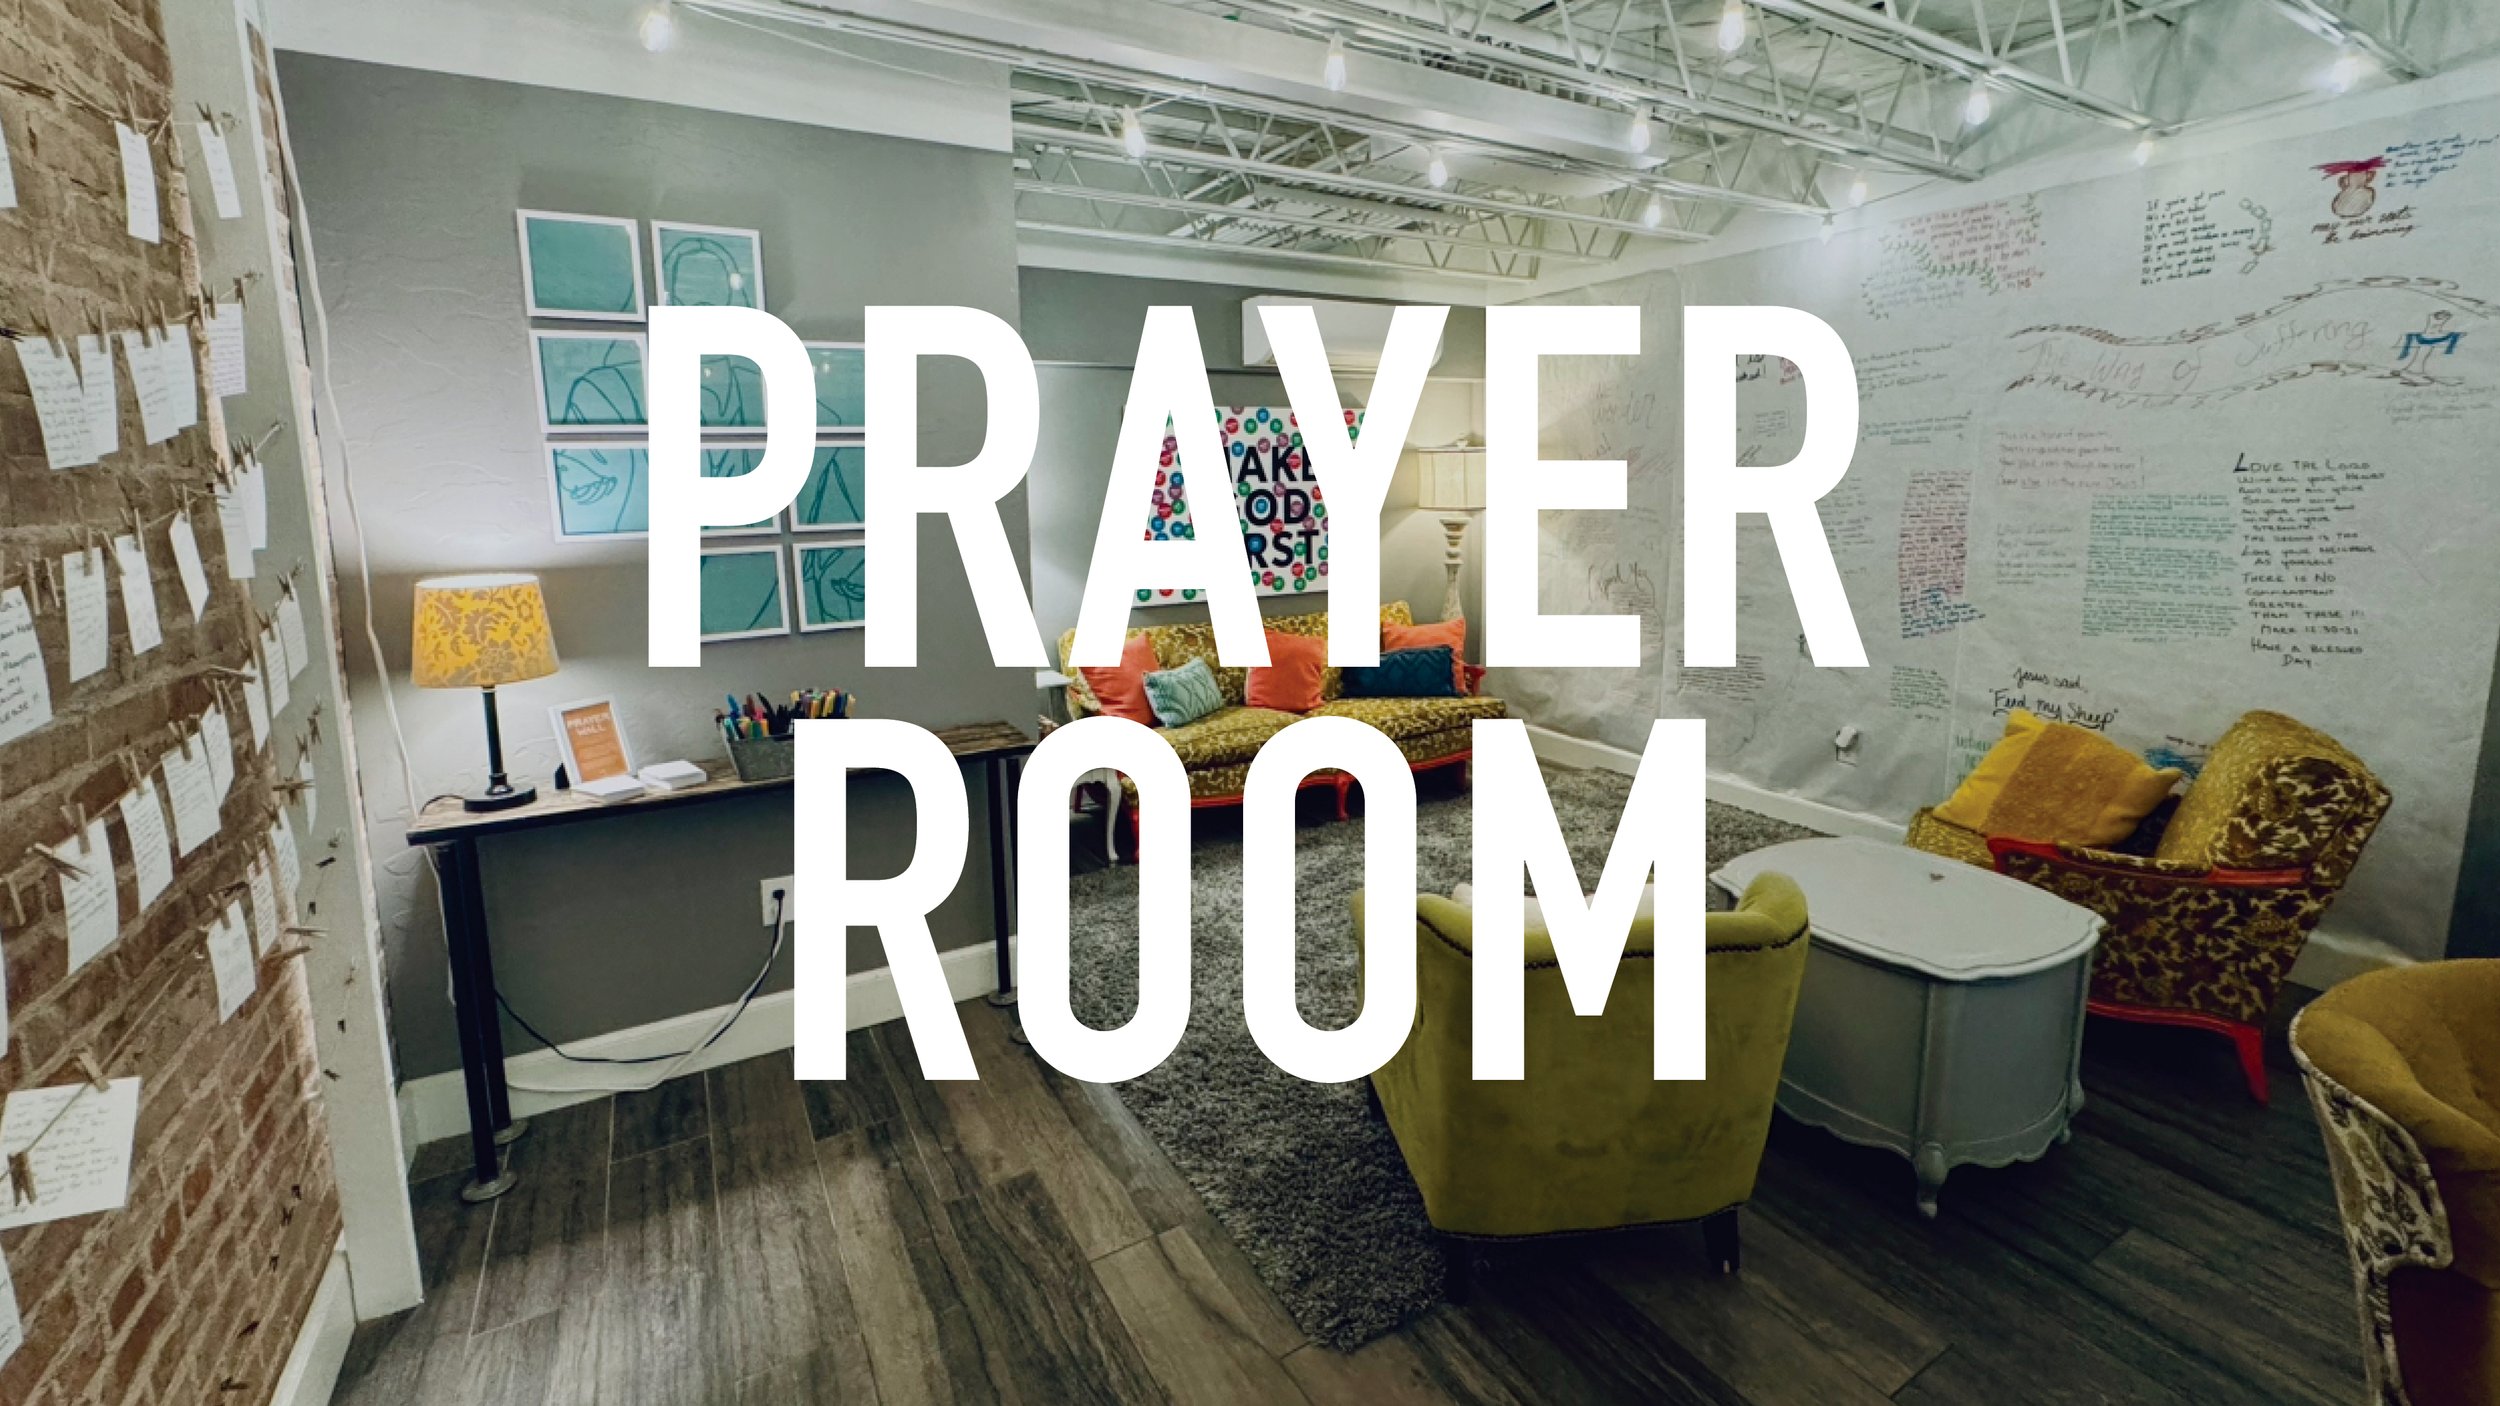 Prayer Room Icon.jpg